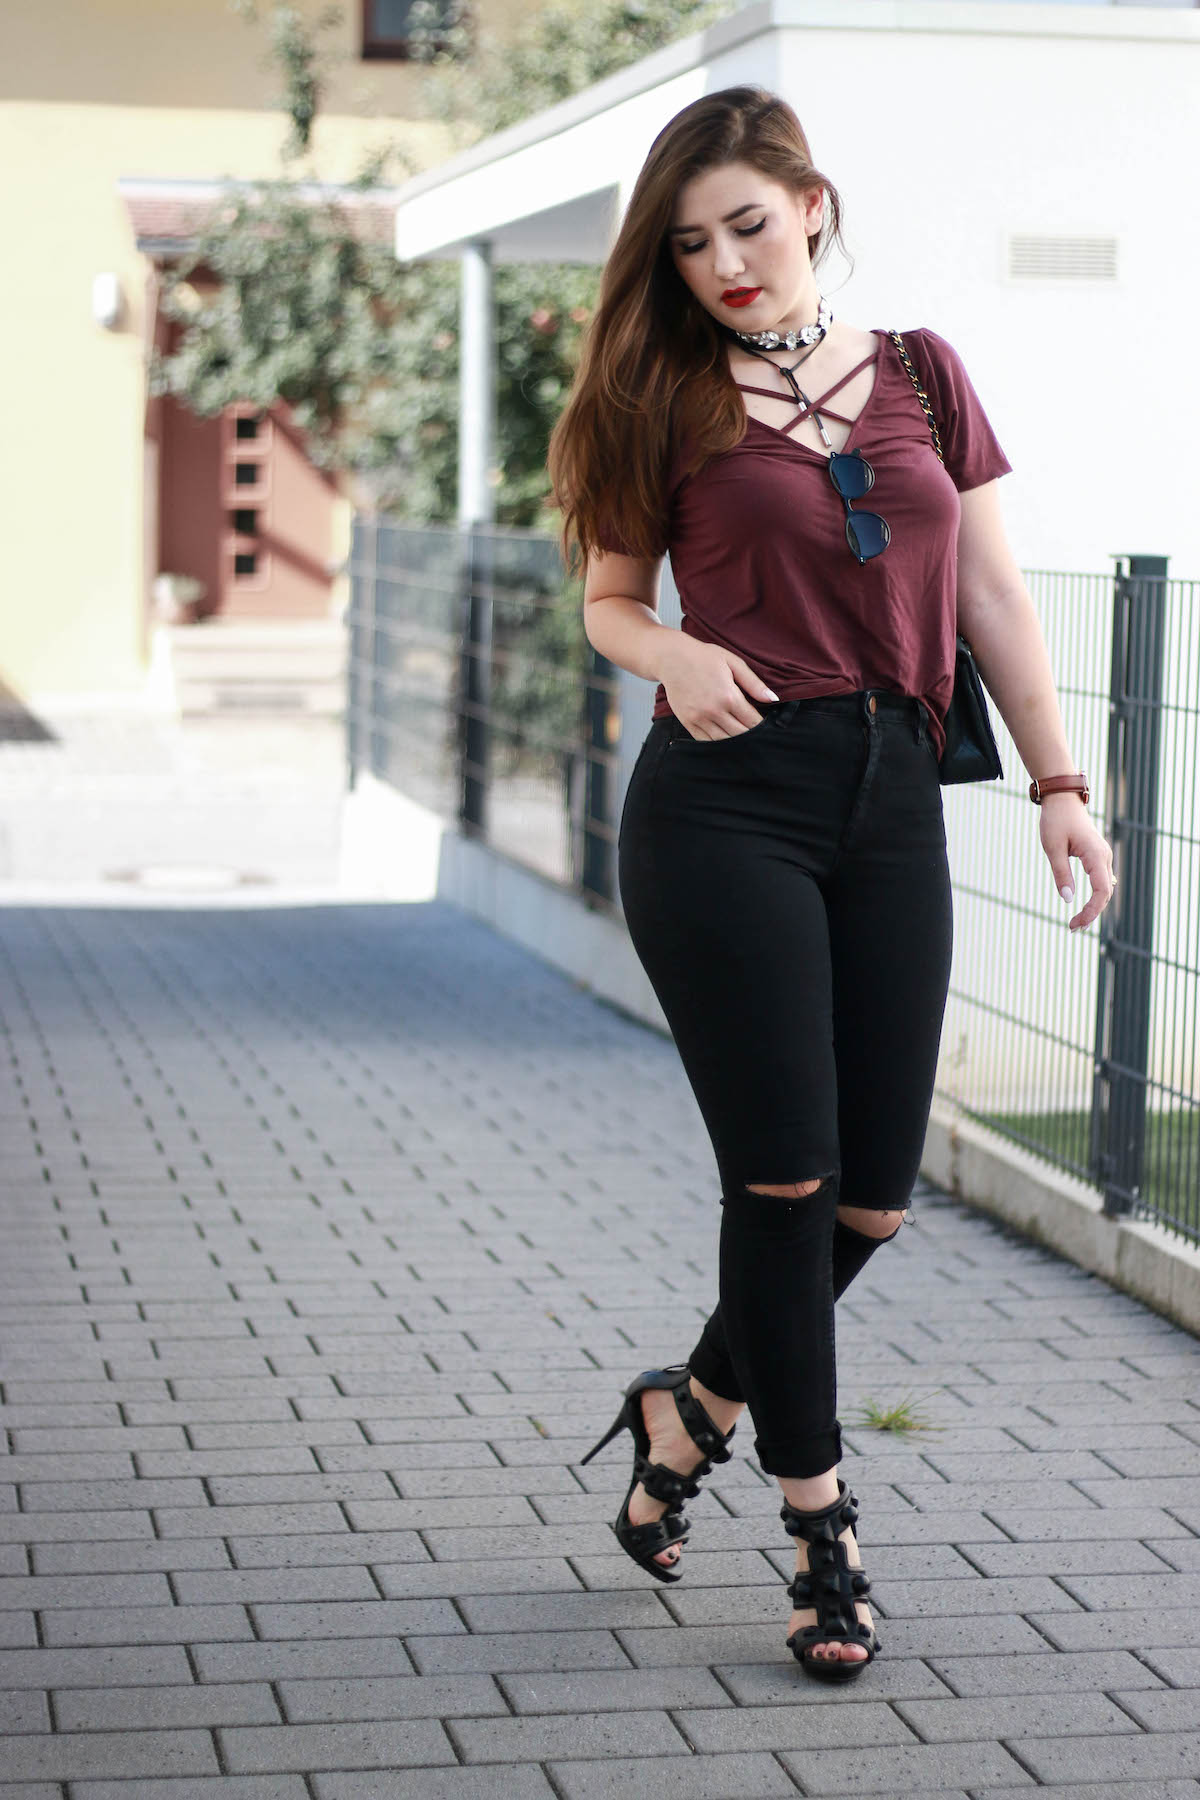 sara-bow-fashion-blogger-aus-stuttgart-burberry-schuhe-heels-outfit